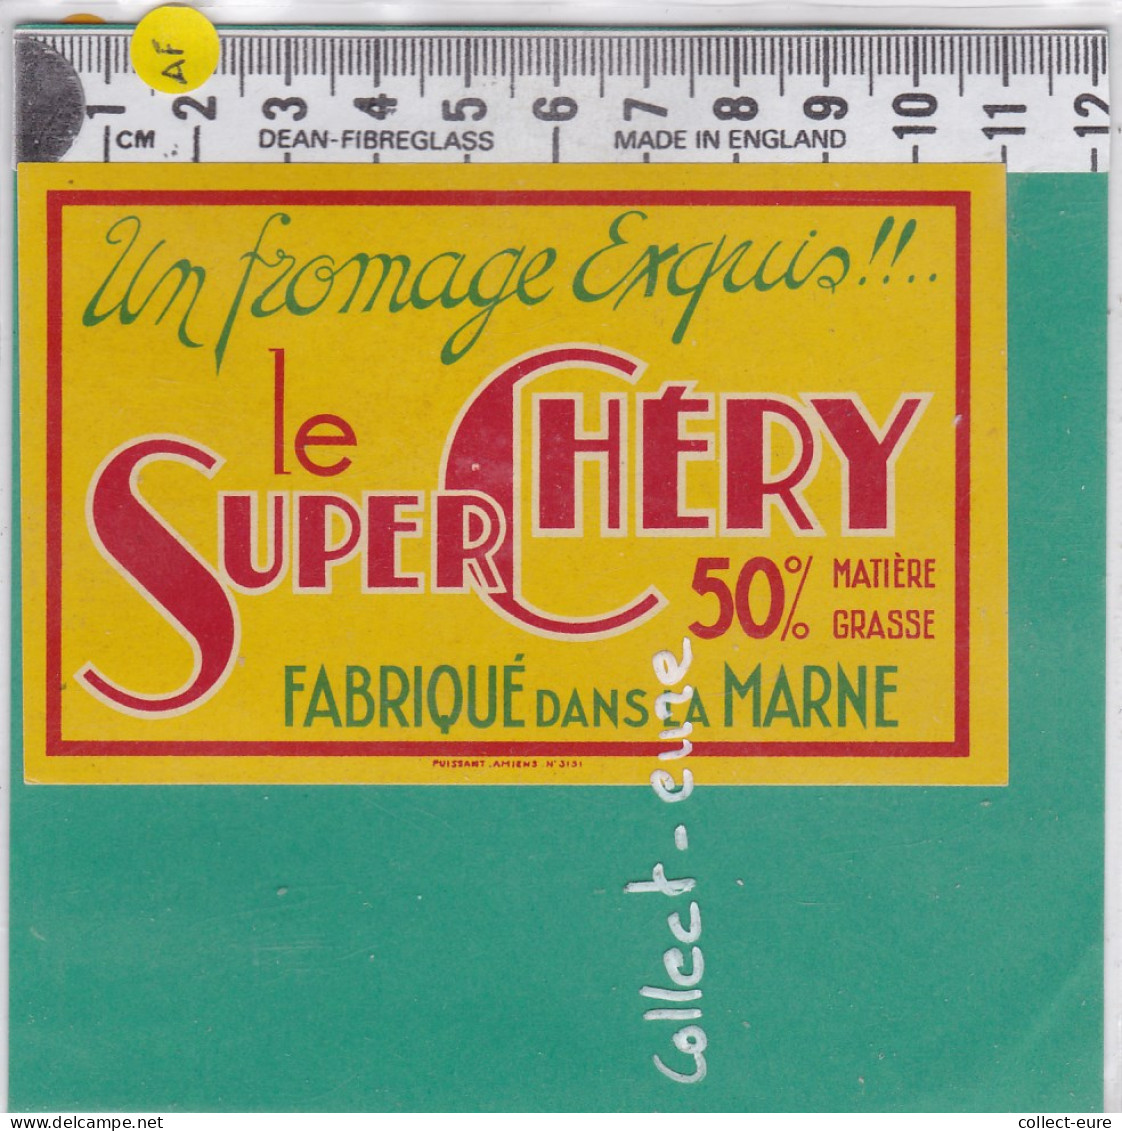 C1224 FROMAGE EXQUIS LE SUPER CHERY MARNE 50 % - Käse